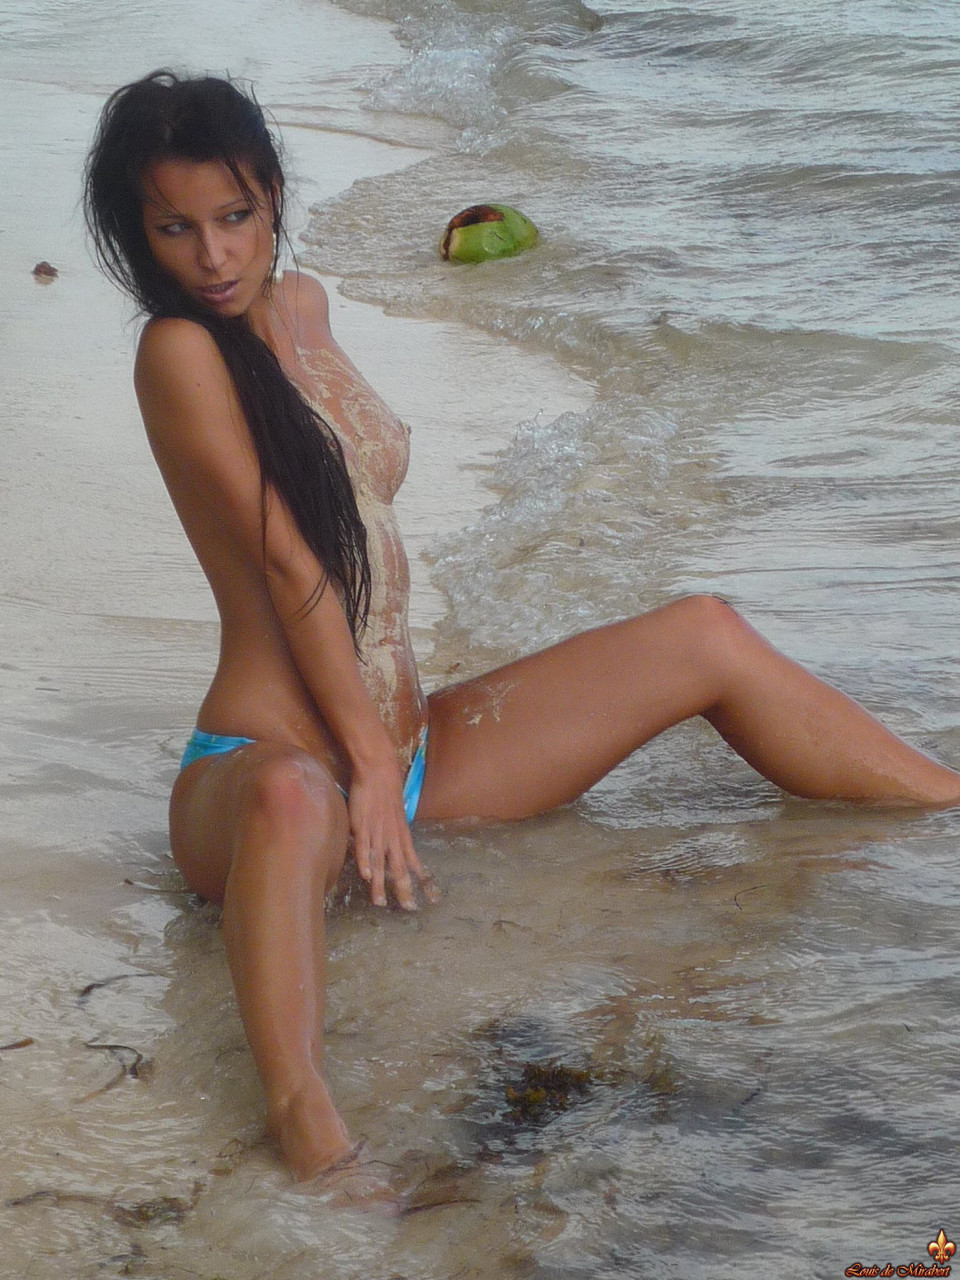 Beautiful girls work free of their swimwear while modeling on a tropical beach ポルノ写真 #424108096